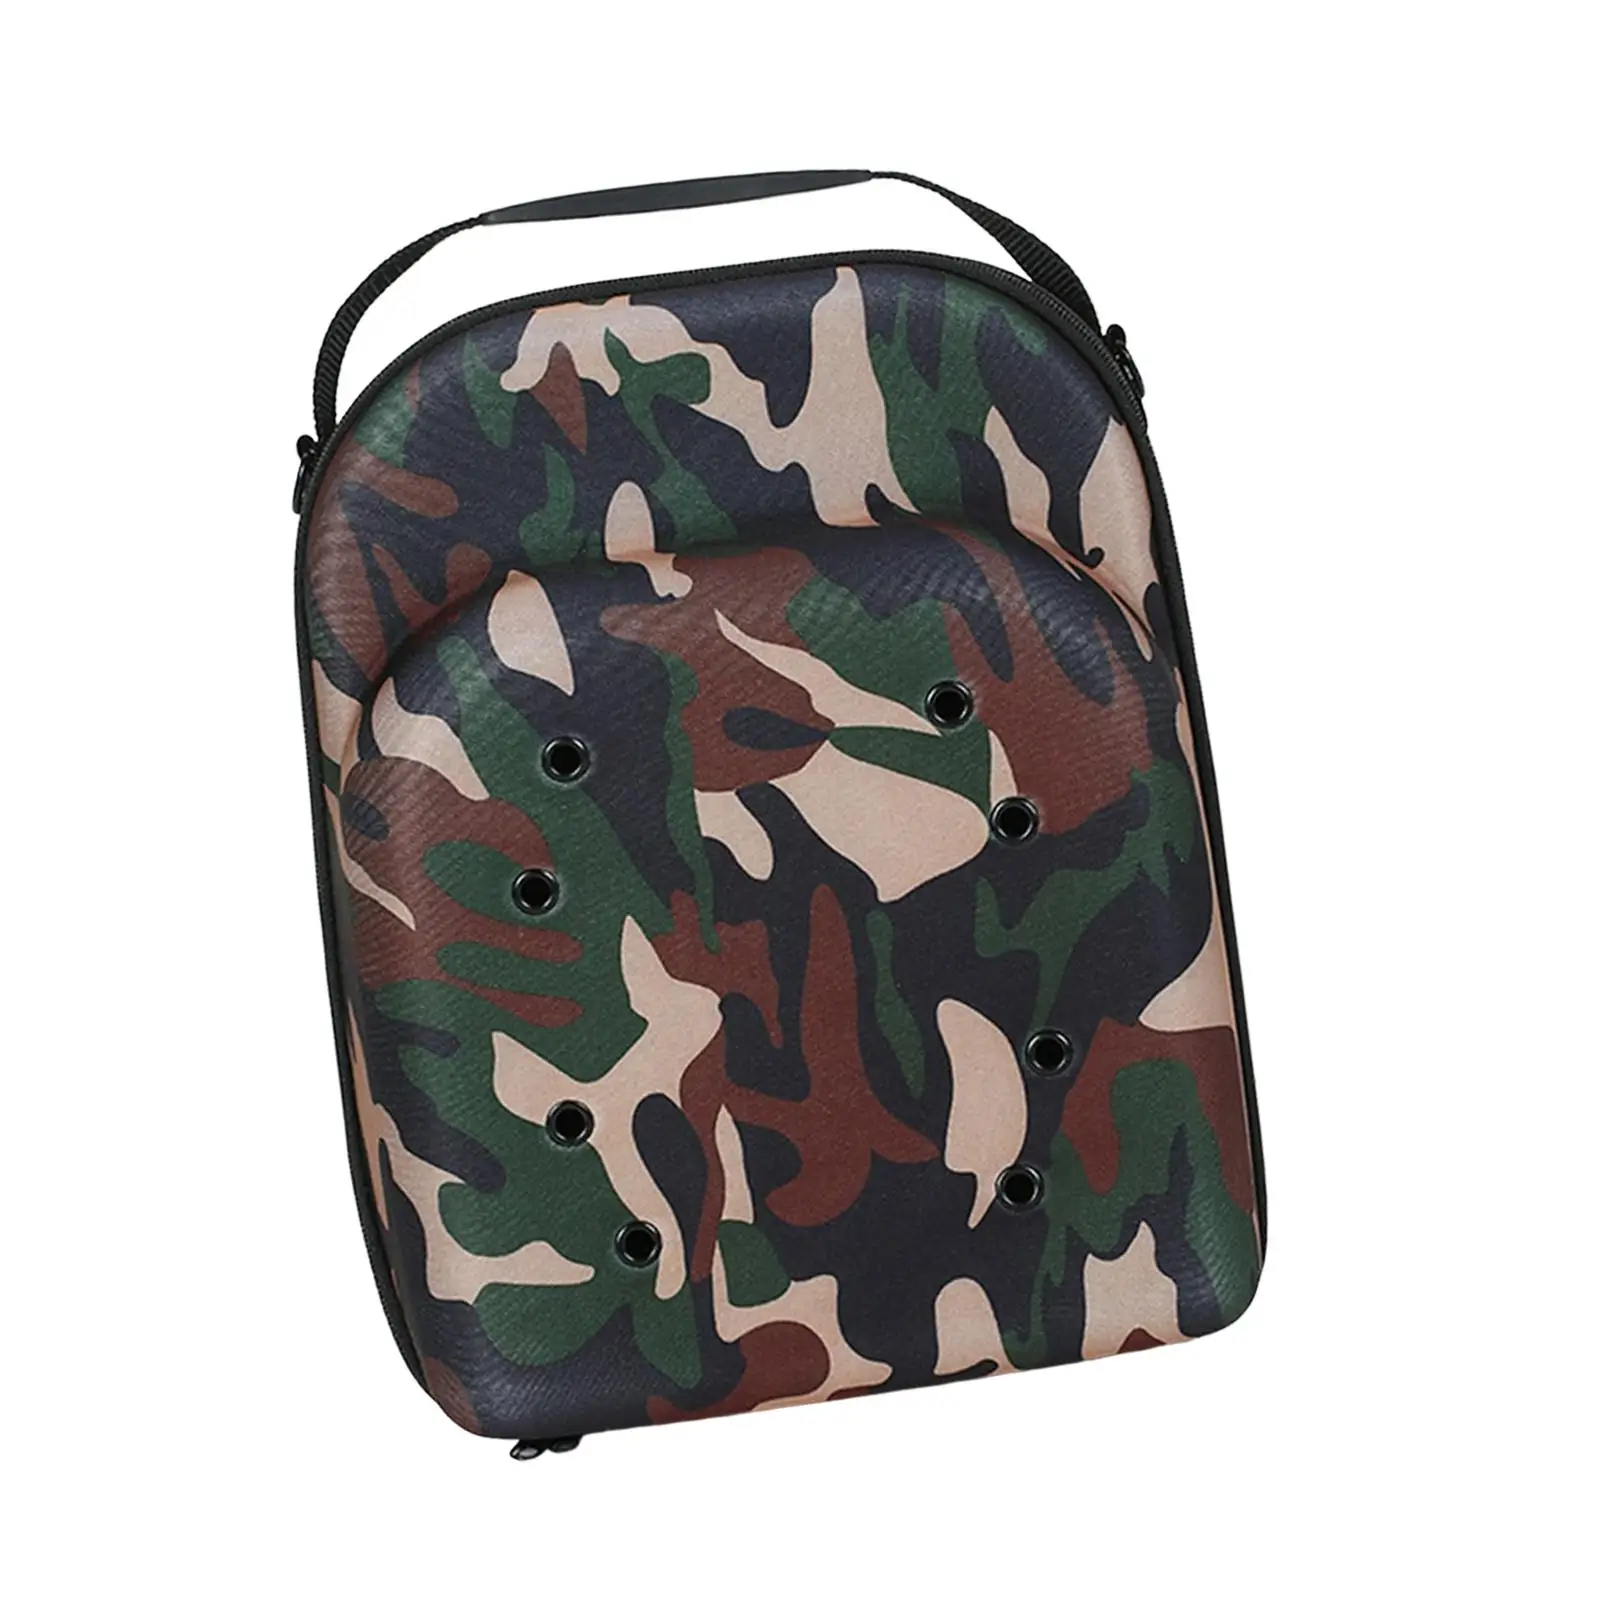 Hat Carrier Case Organizer Baseball Caps Carrier Bag Backpack for Camping